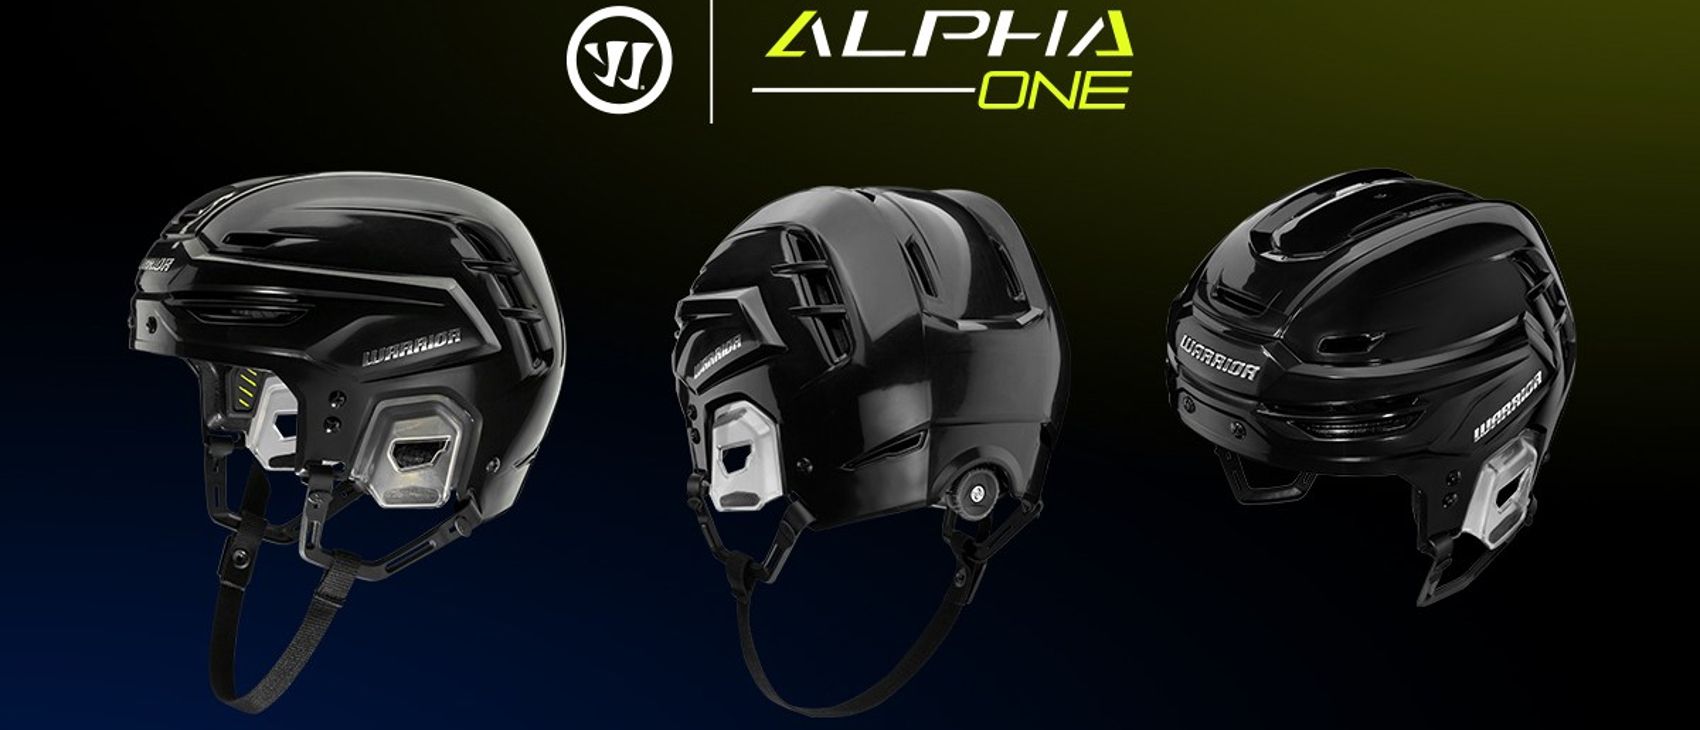 Hockeyshop70 in Wien Warrior Alpha One Helm